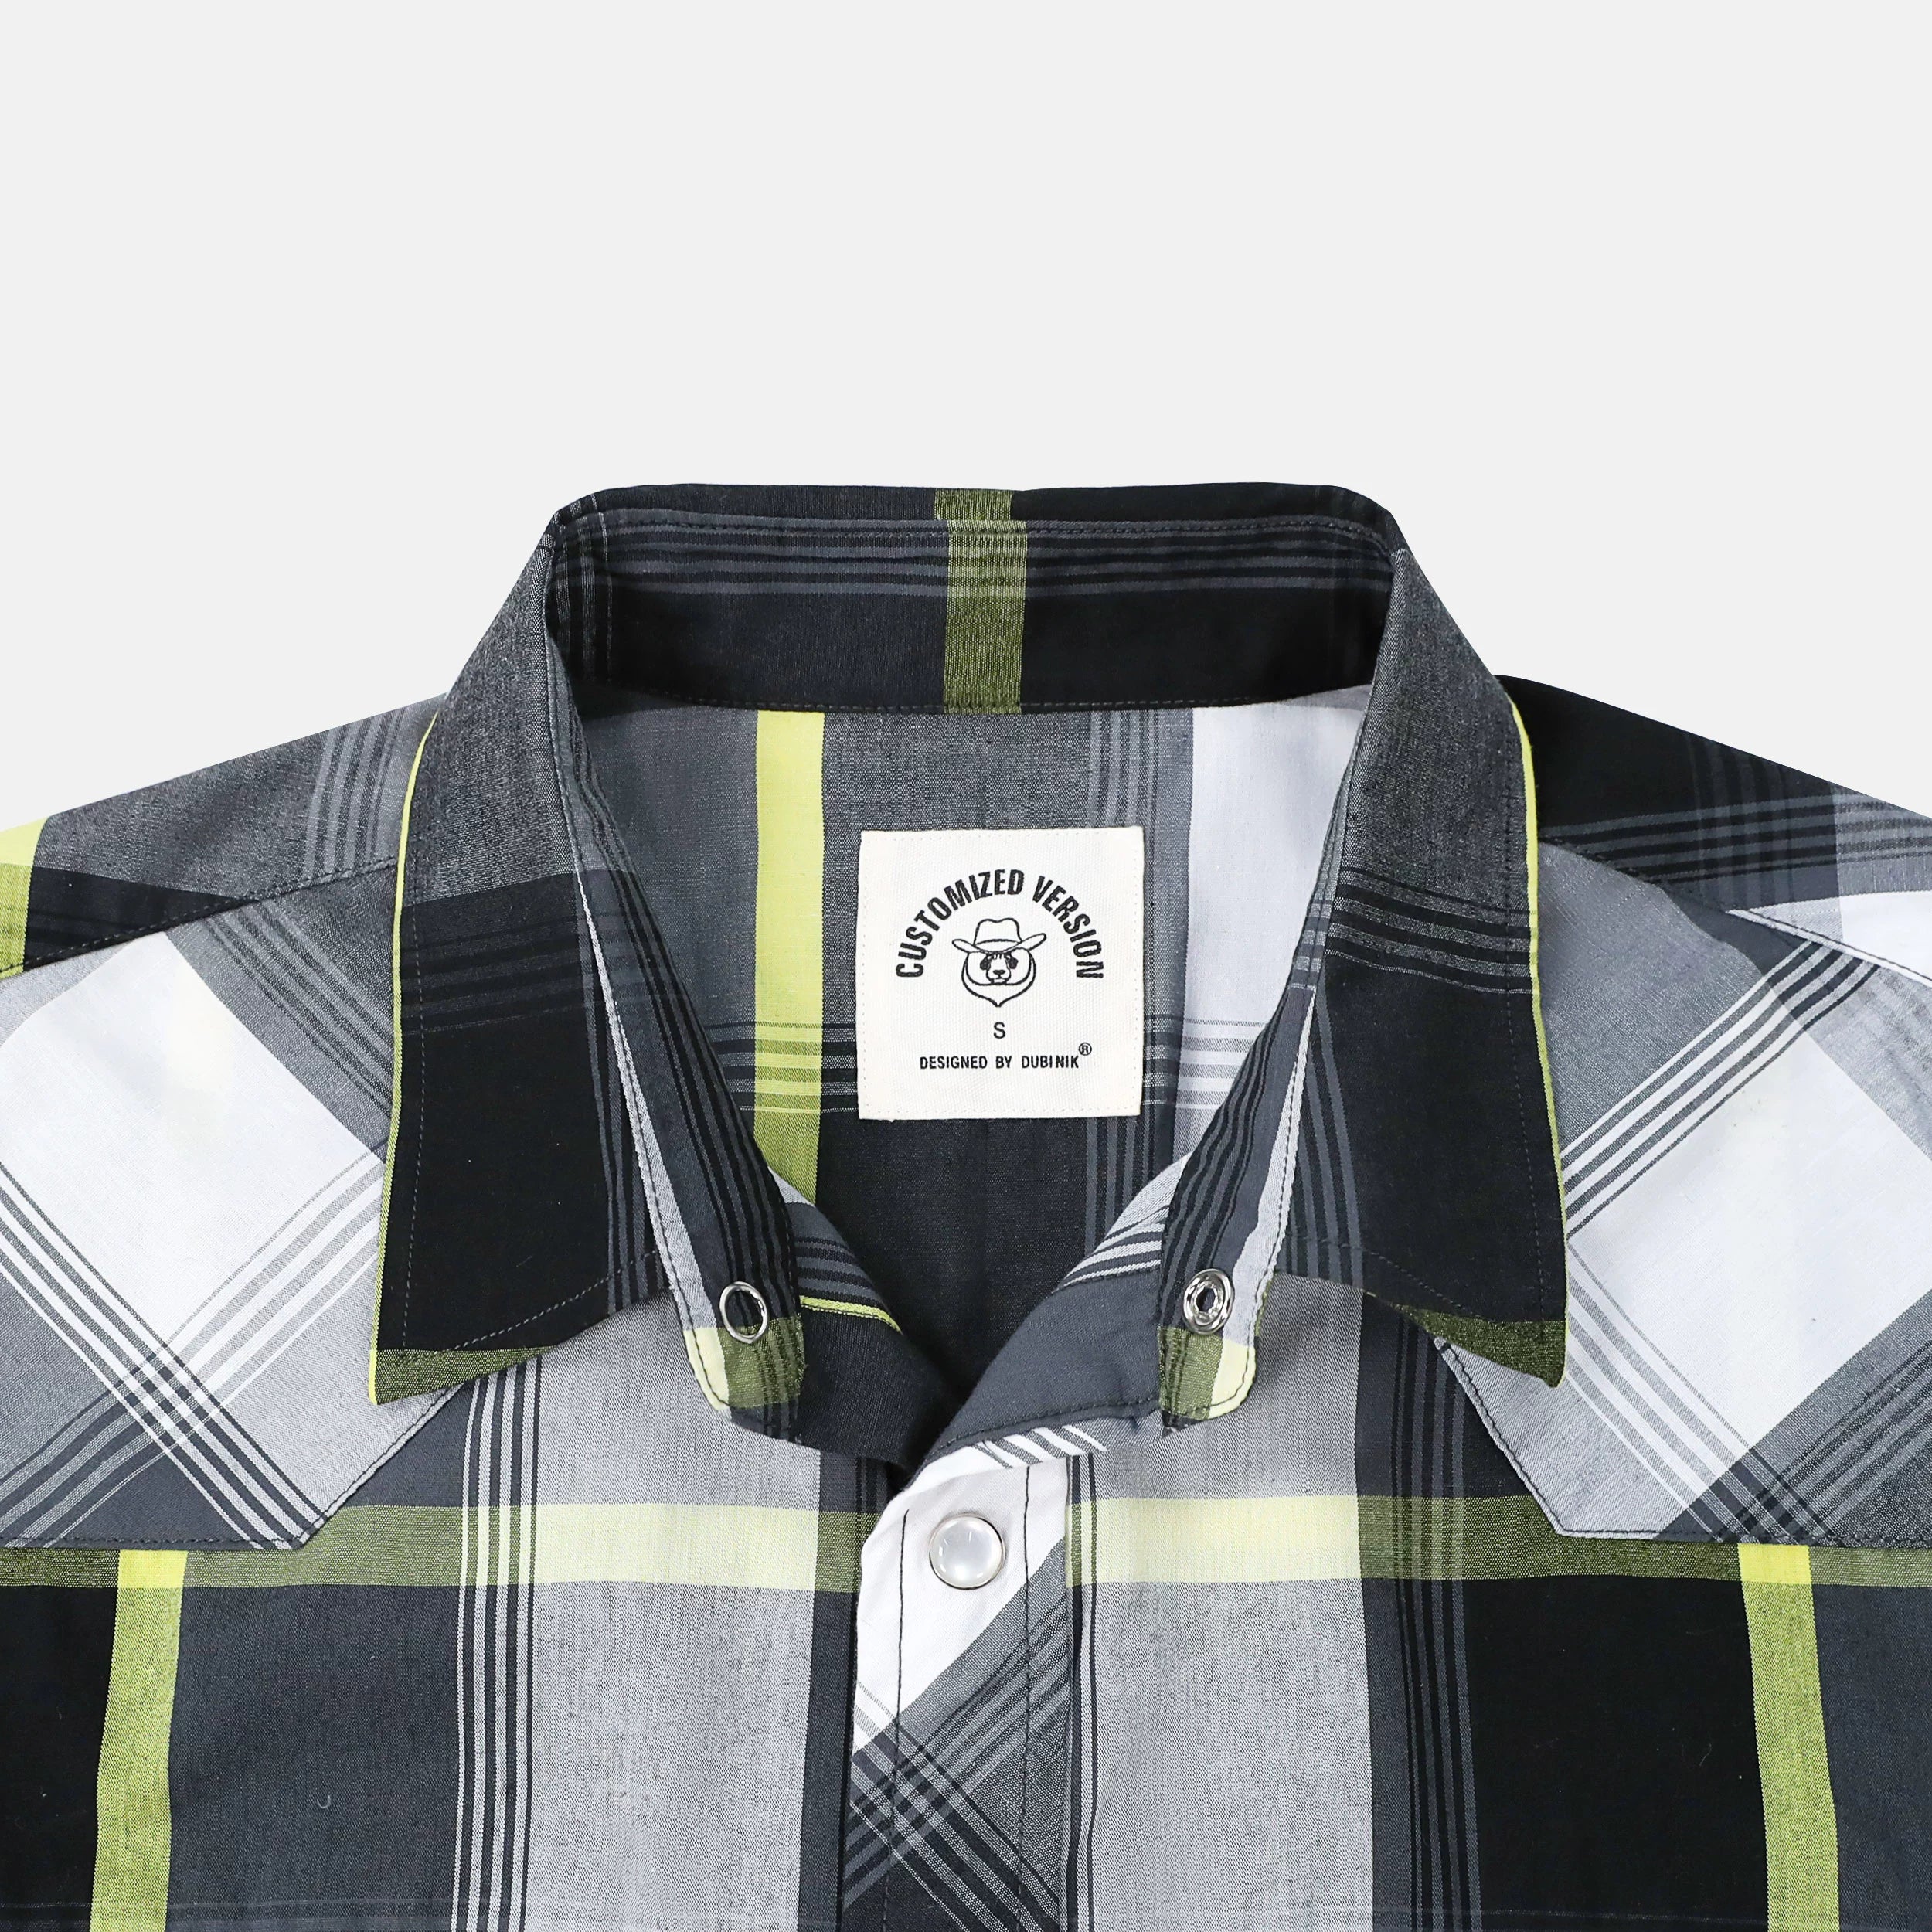 Dubinik® Western Shirts for Men Short Sleeve Plaid Pearl Snap Shirts for Men Button Up Shirt Cowboy Casual Work Shirt#41017